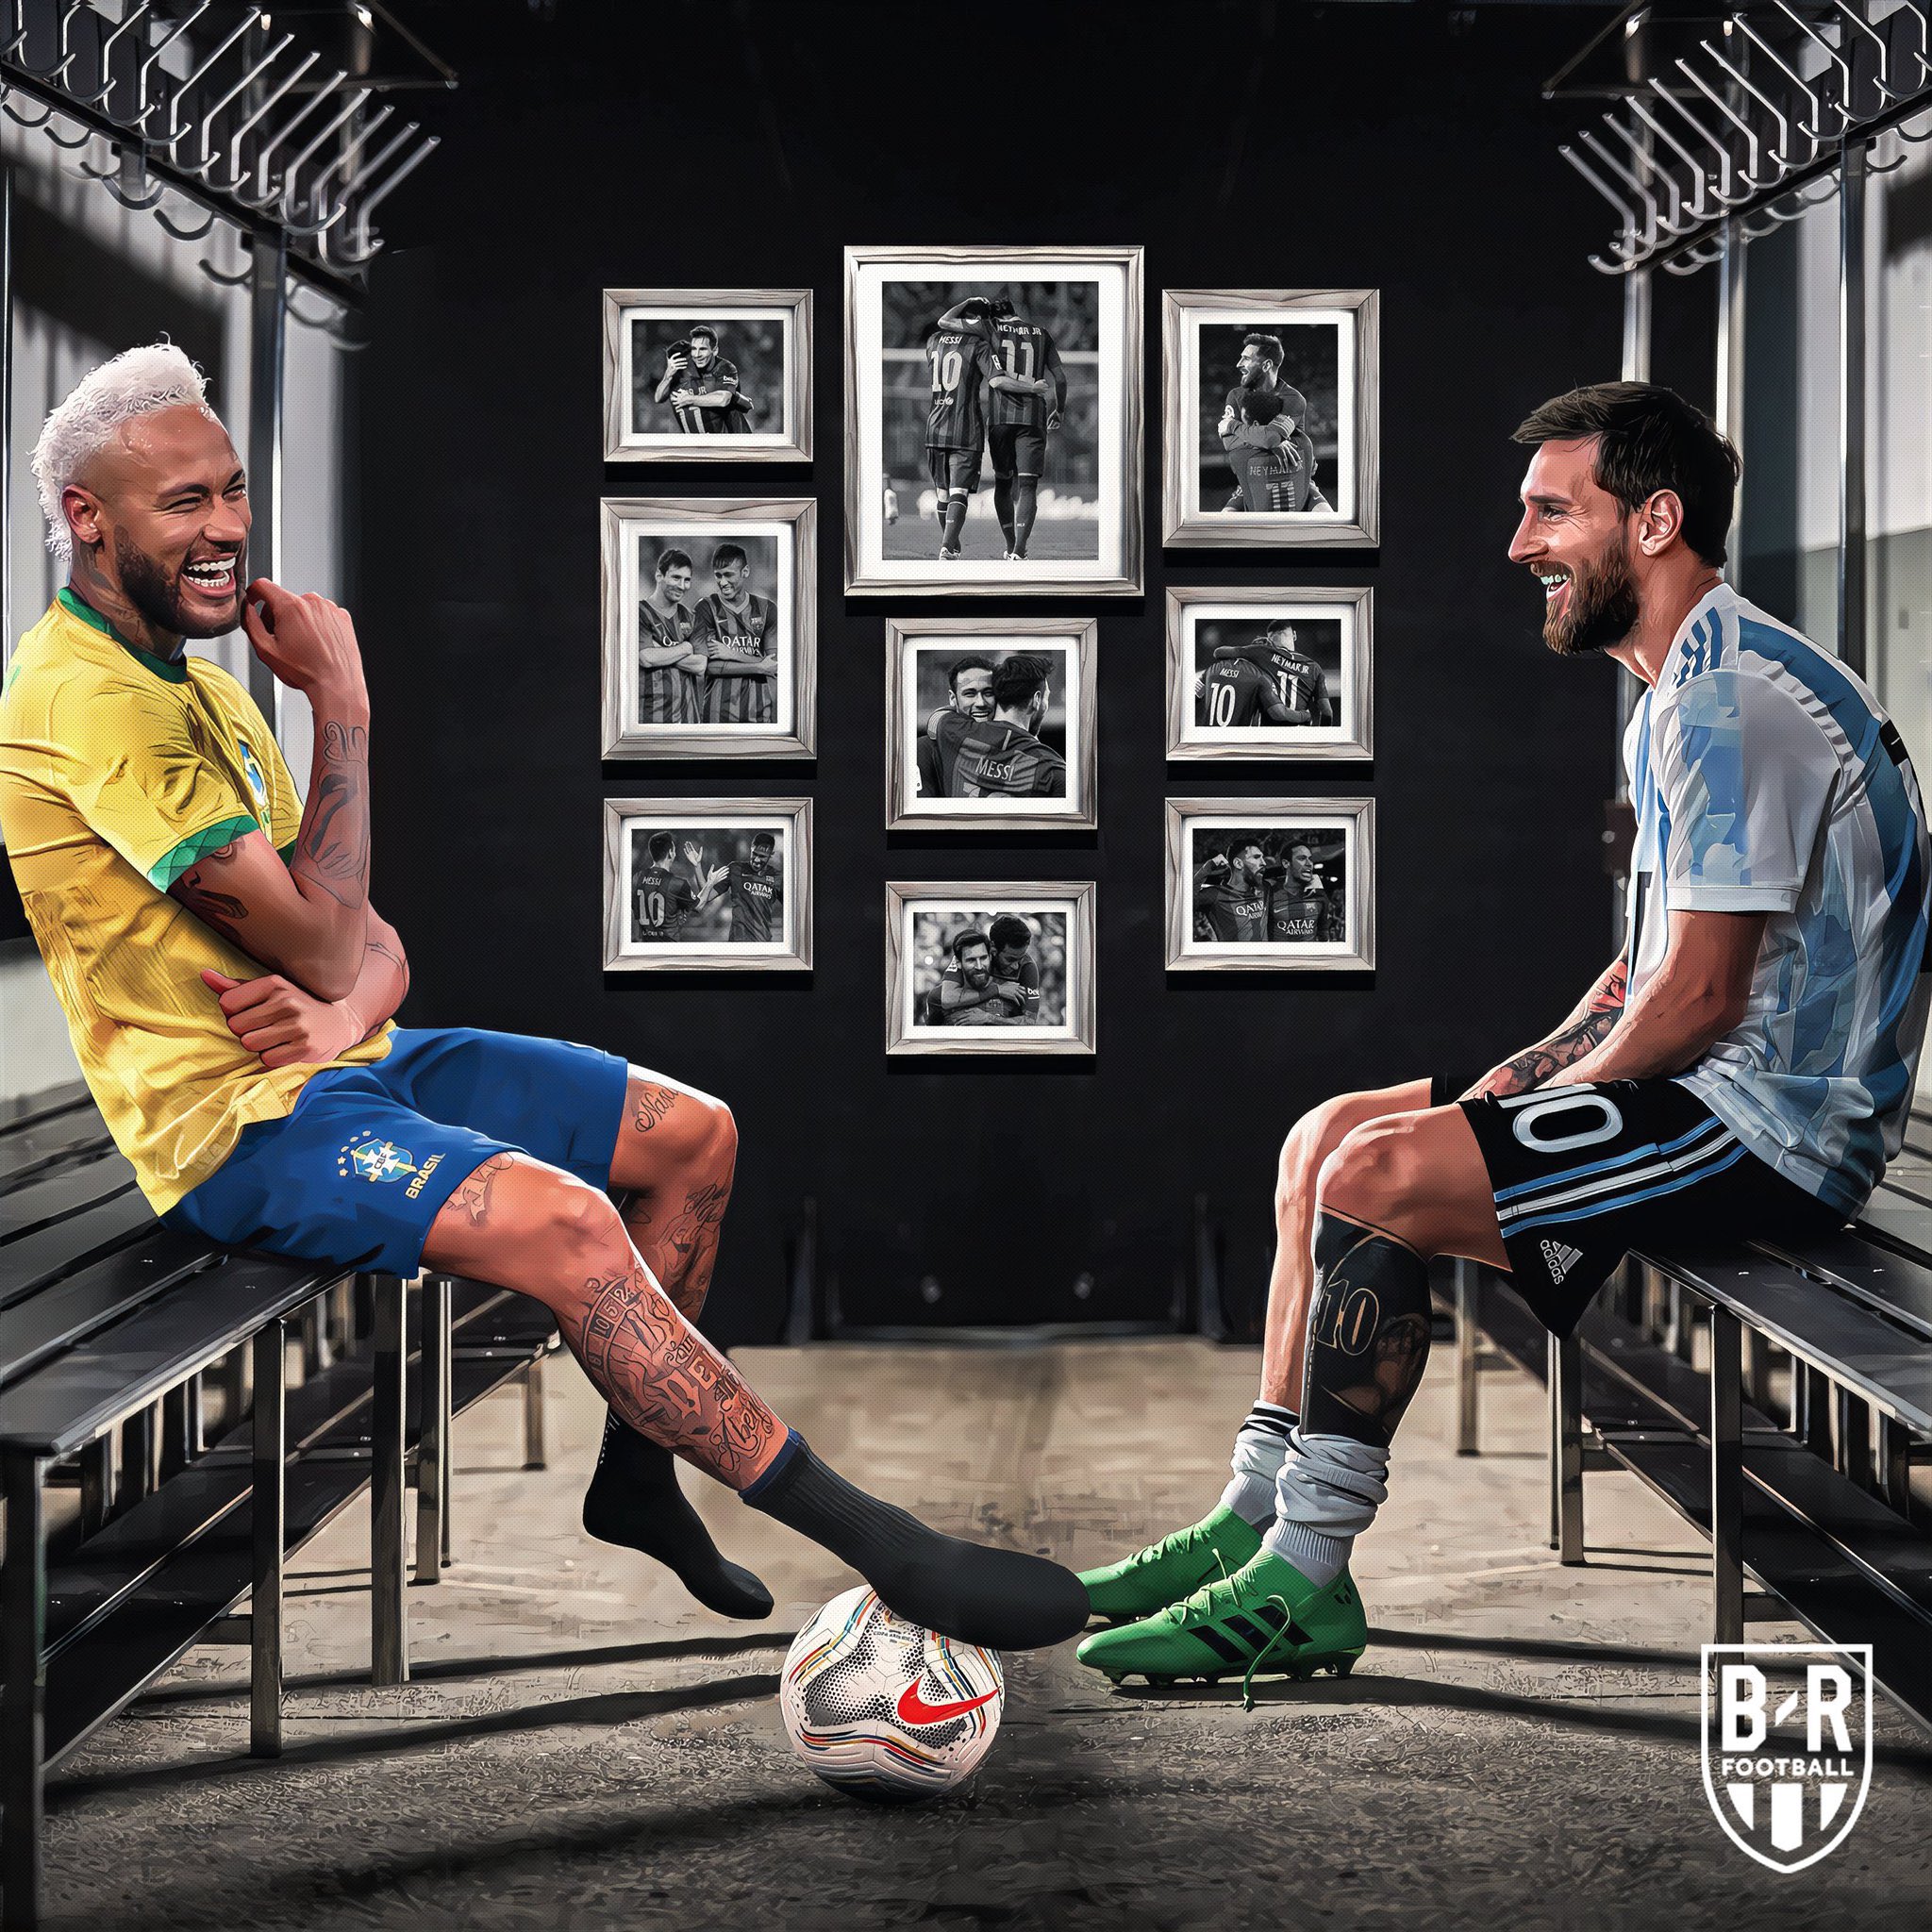 final Brazil vs Argentina 2021 wallpaper